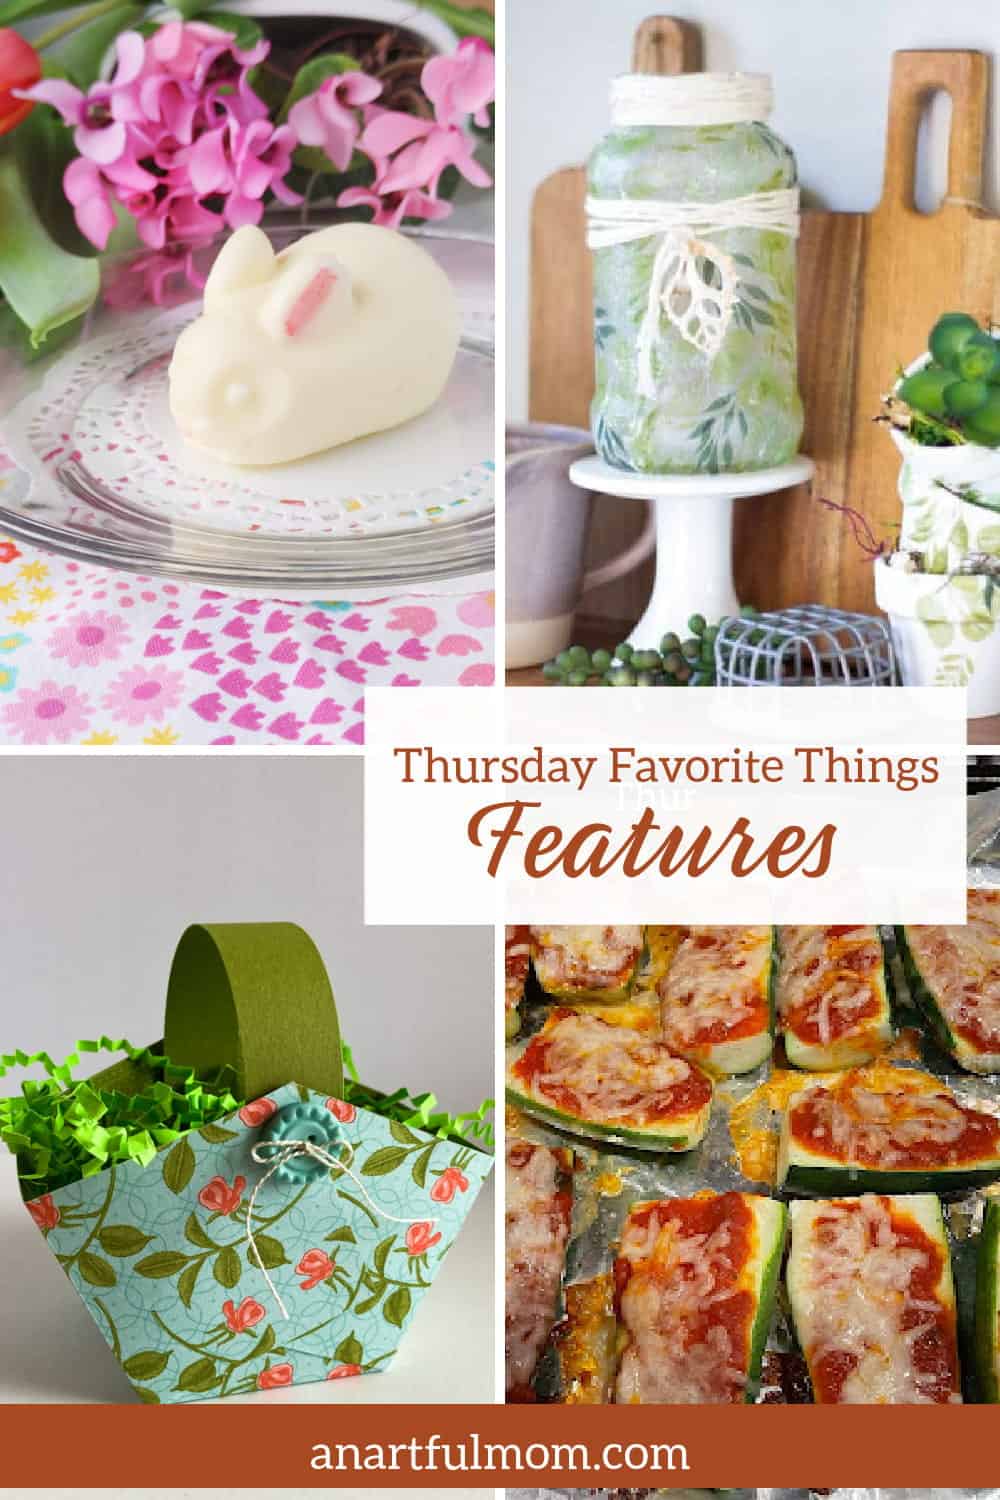 Thursday Favorite Things #535